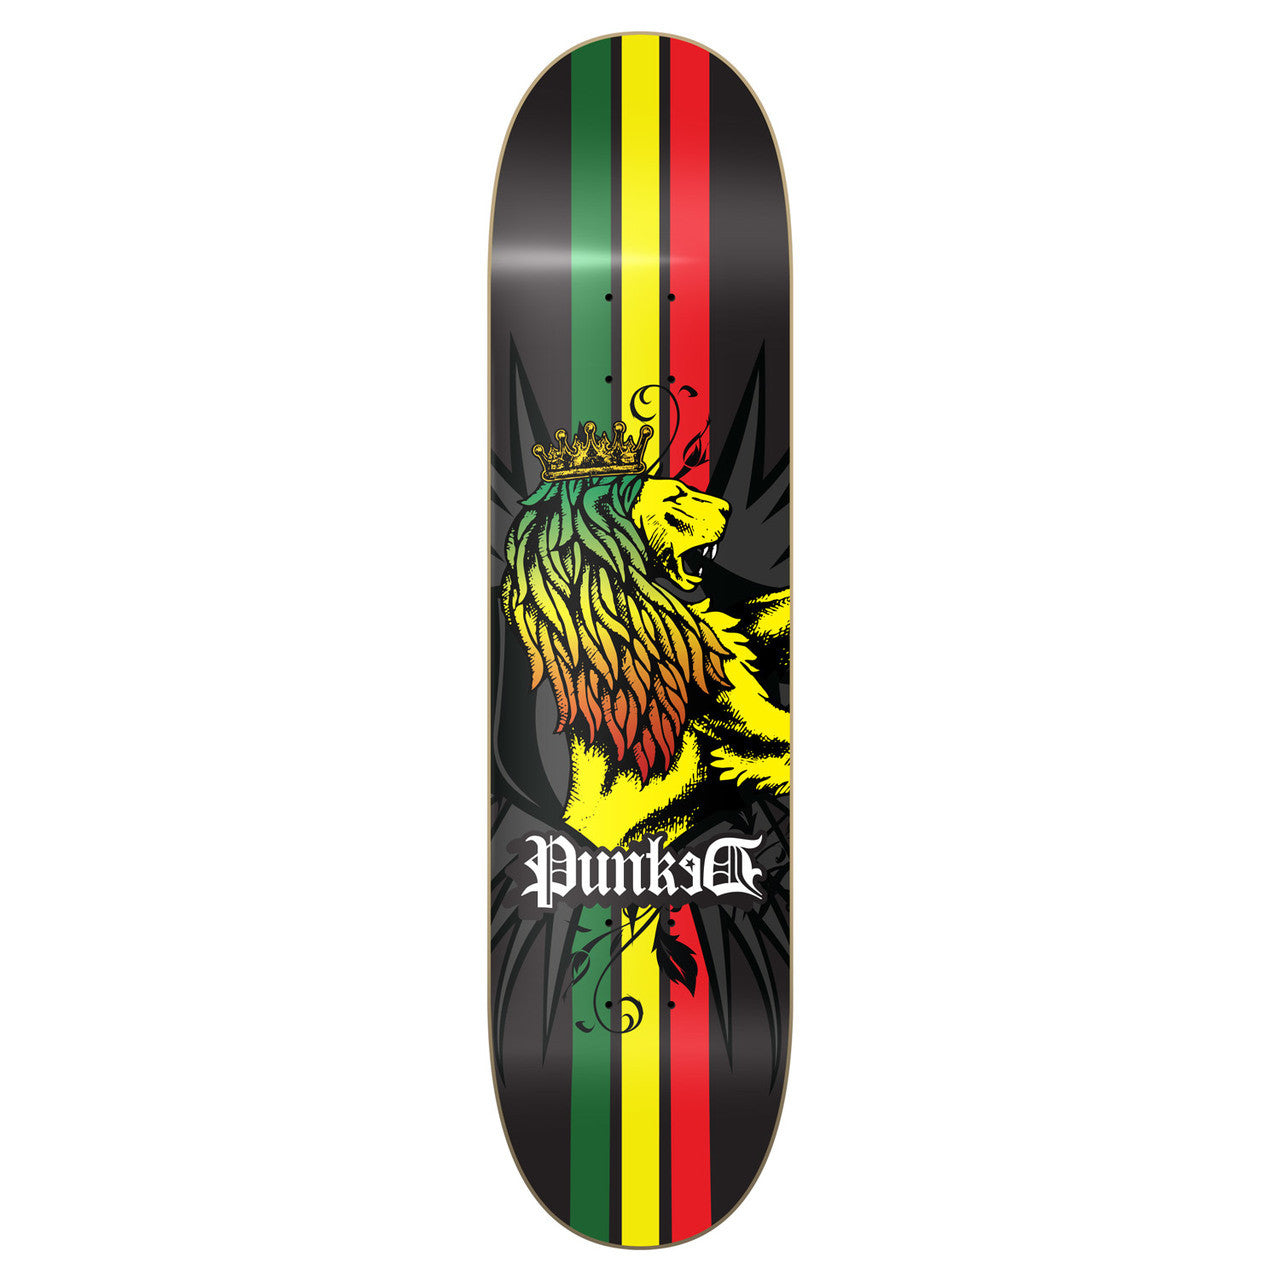 Graphic Rasta Skateboard Deck